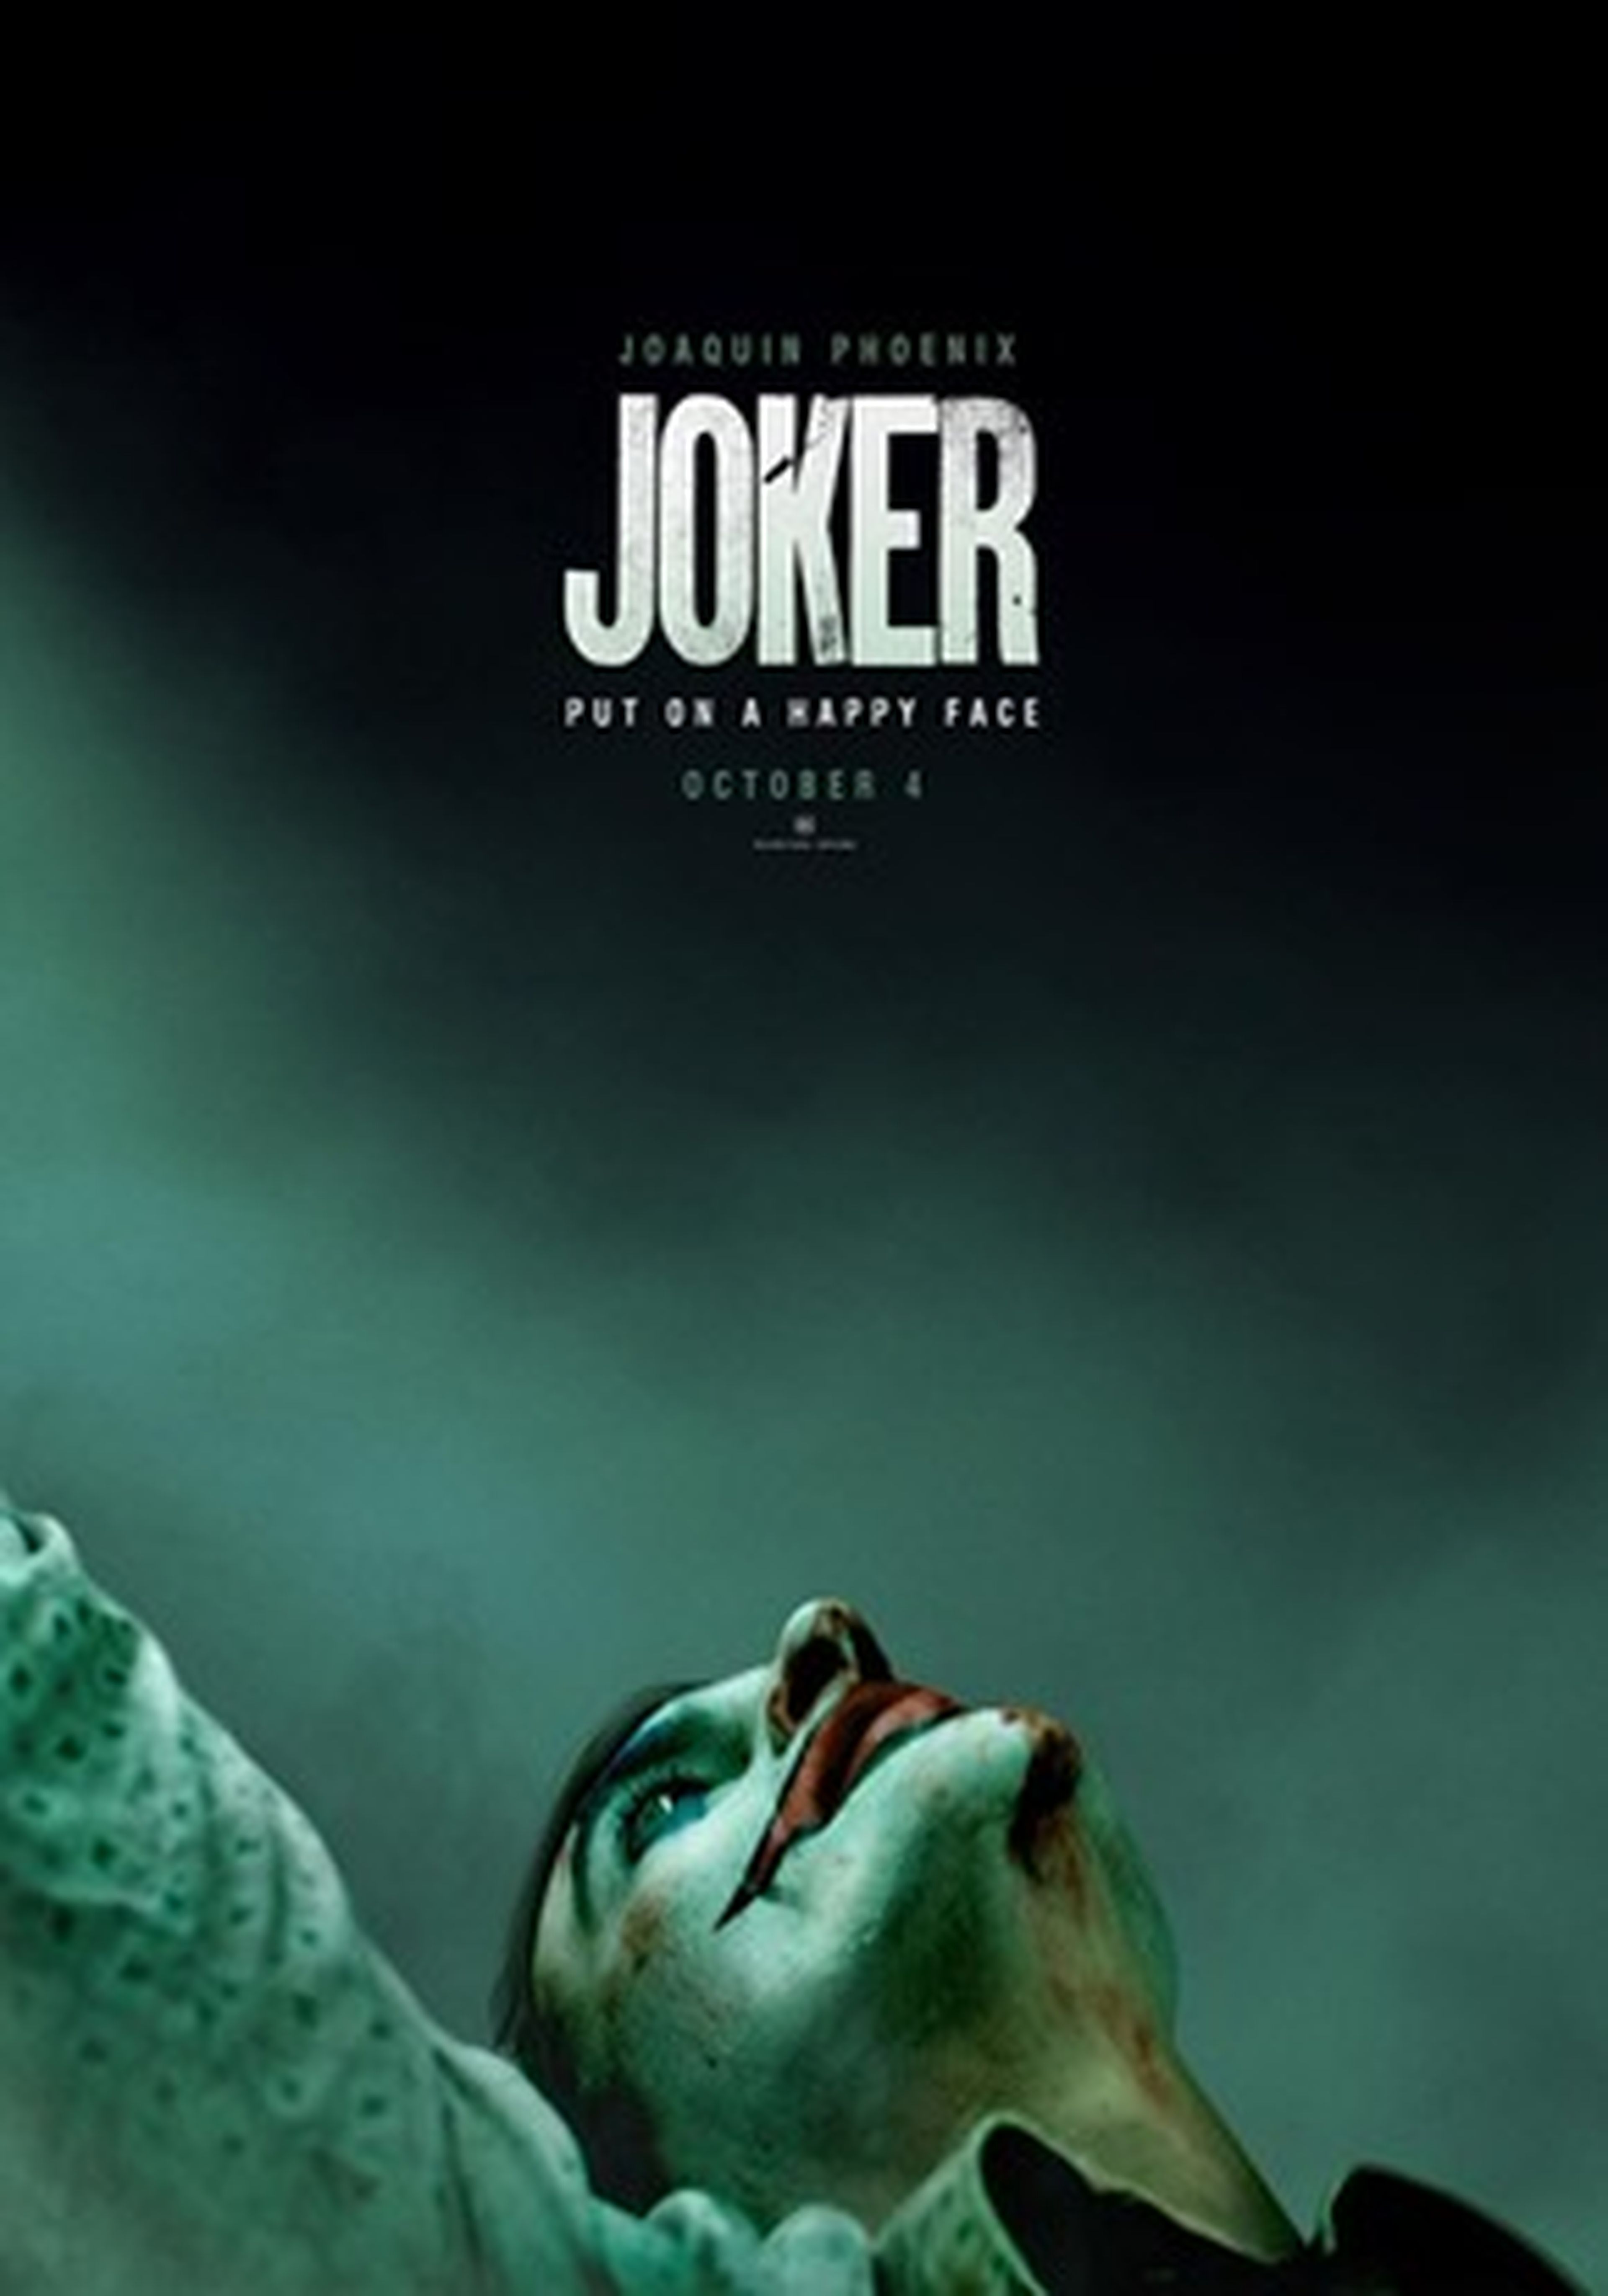 Joker cartel 2019